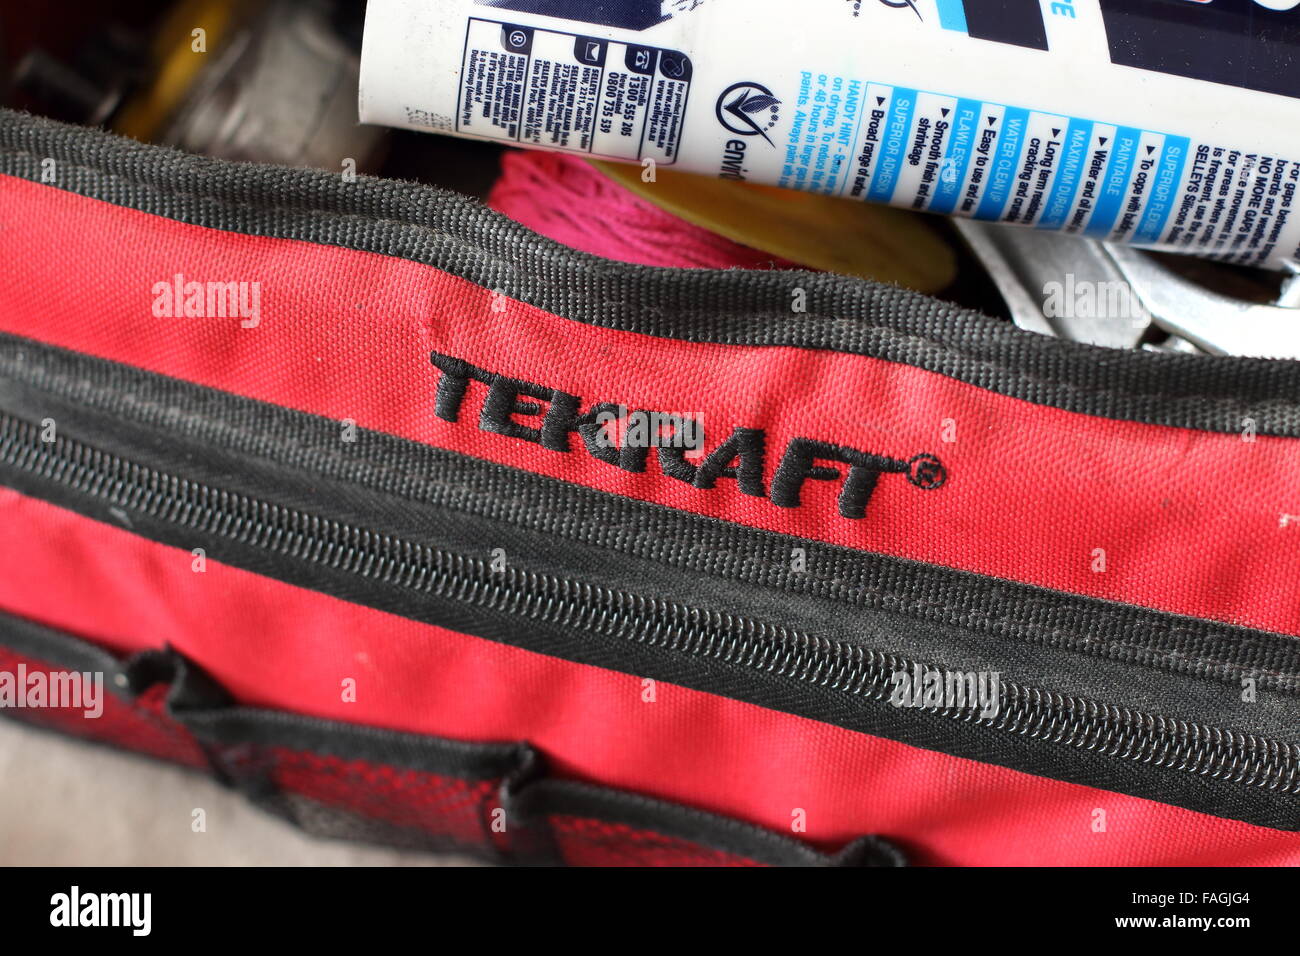 Tekraft tool bag Stock Photo